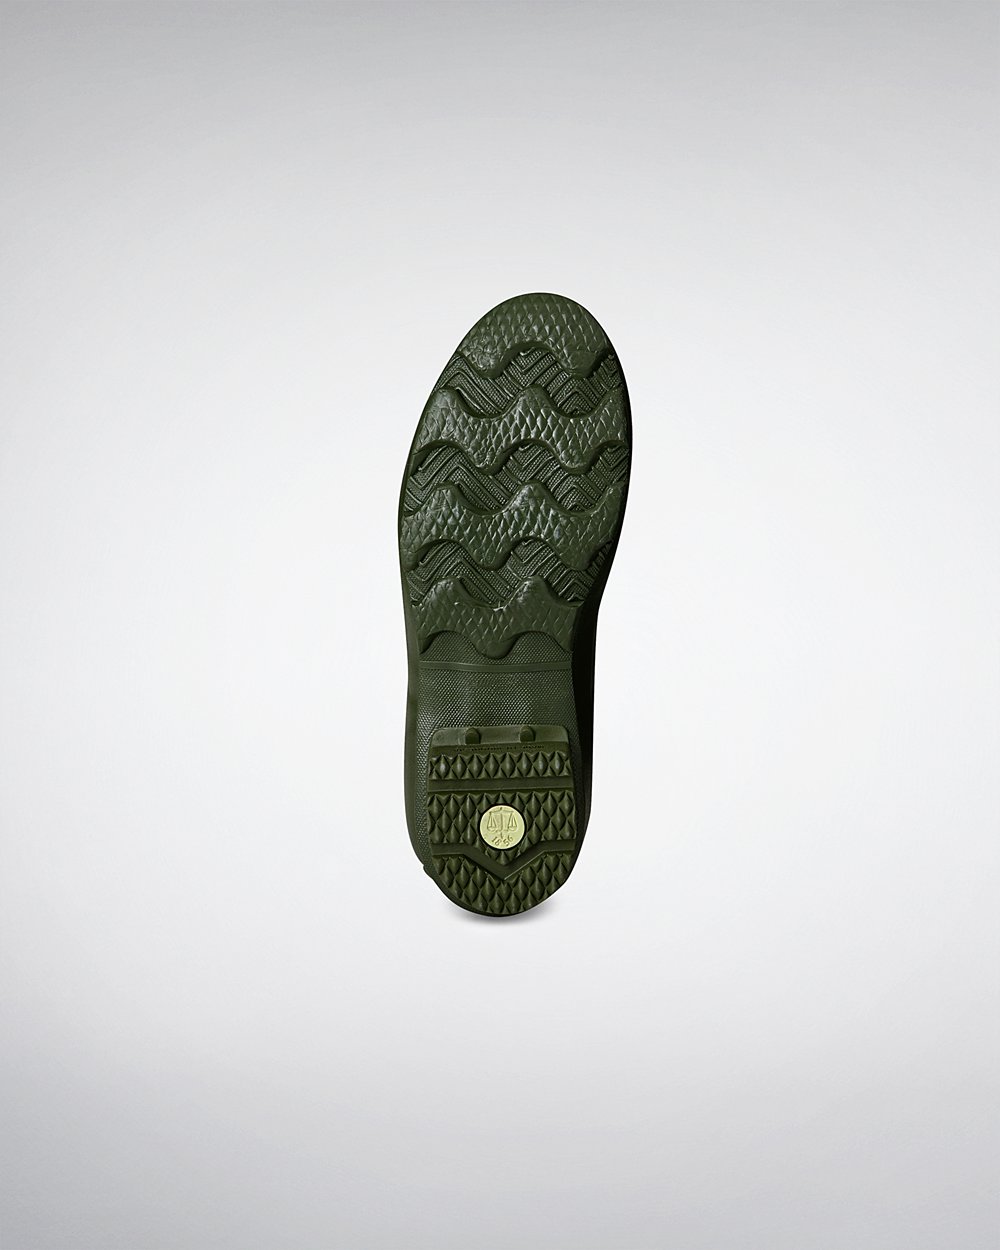 Womens Tall Rain Boots - Hunter Norris Field Side Adjustable (78DYLVPAQ) - Green